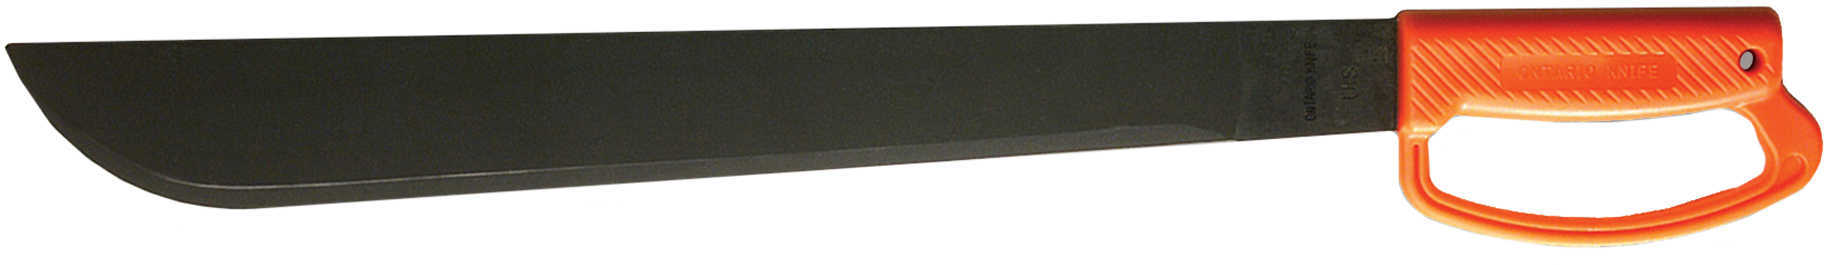 Ontario Filed Machete 18.0 in Black Blade Polymer Handle